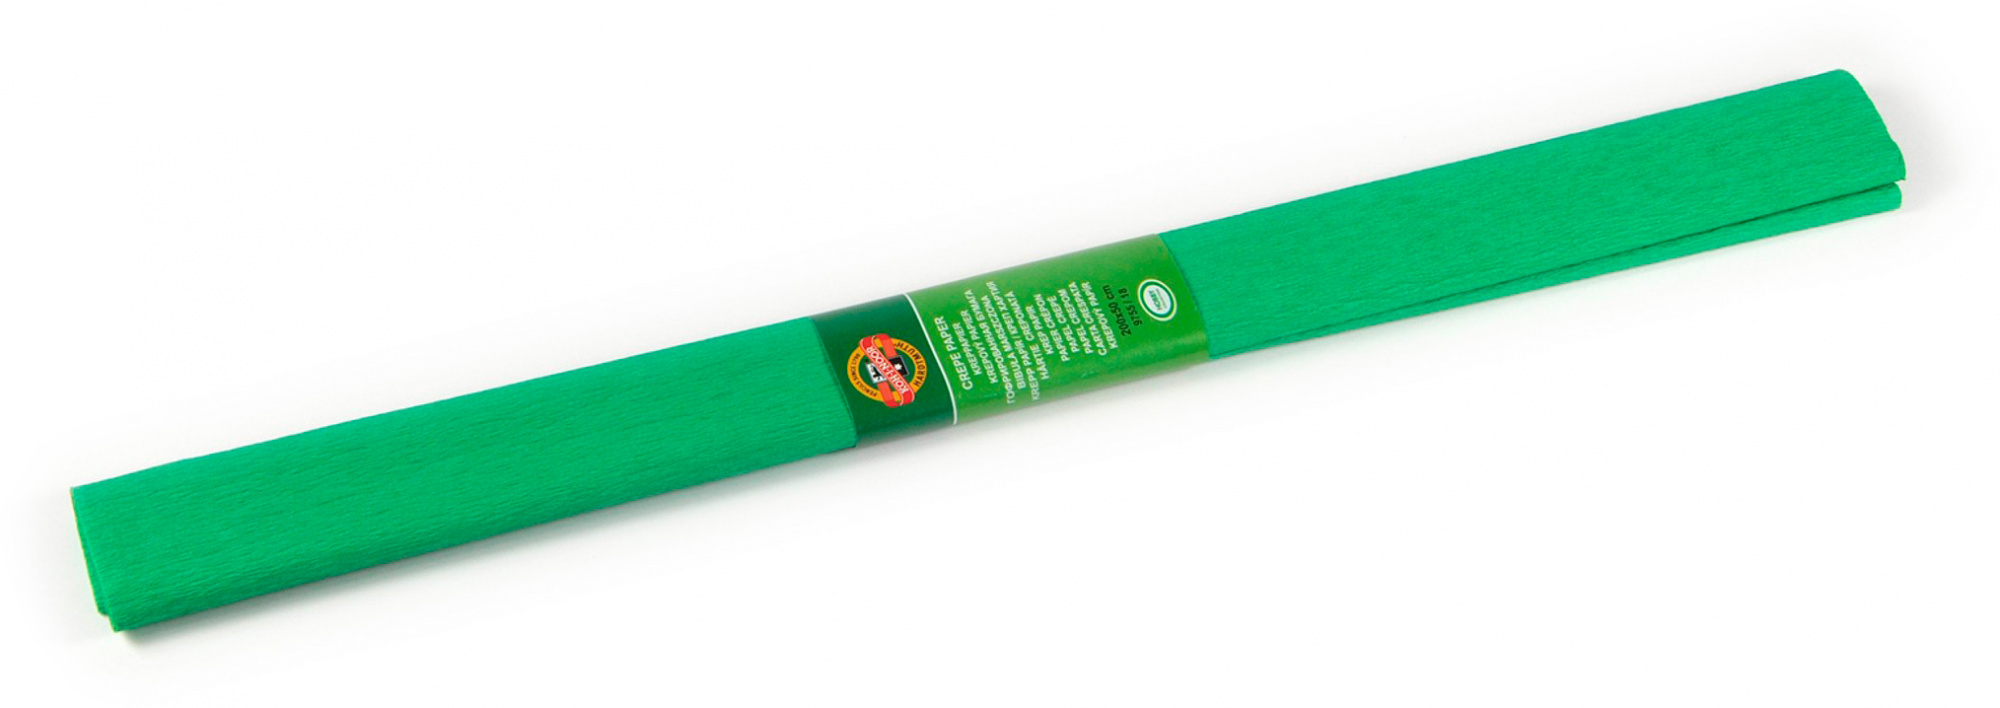 Бумага цветная Koh-I-Noor 9755018001PM зеленый крепир. 1цв. 30г/м2 (упак.:10шт)